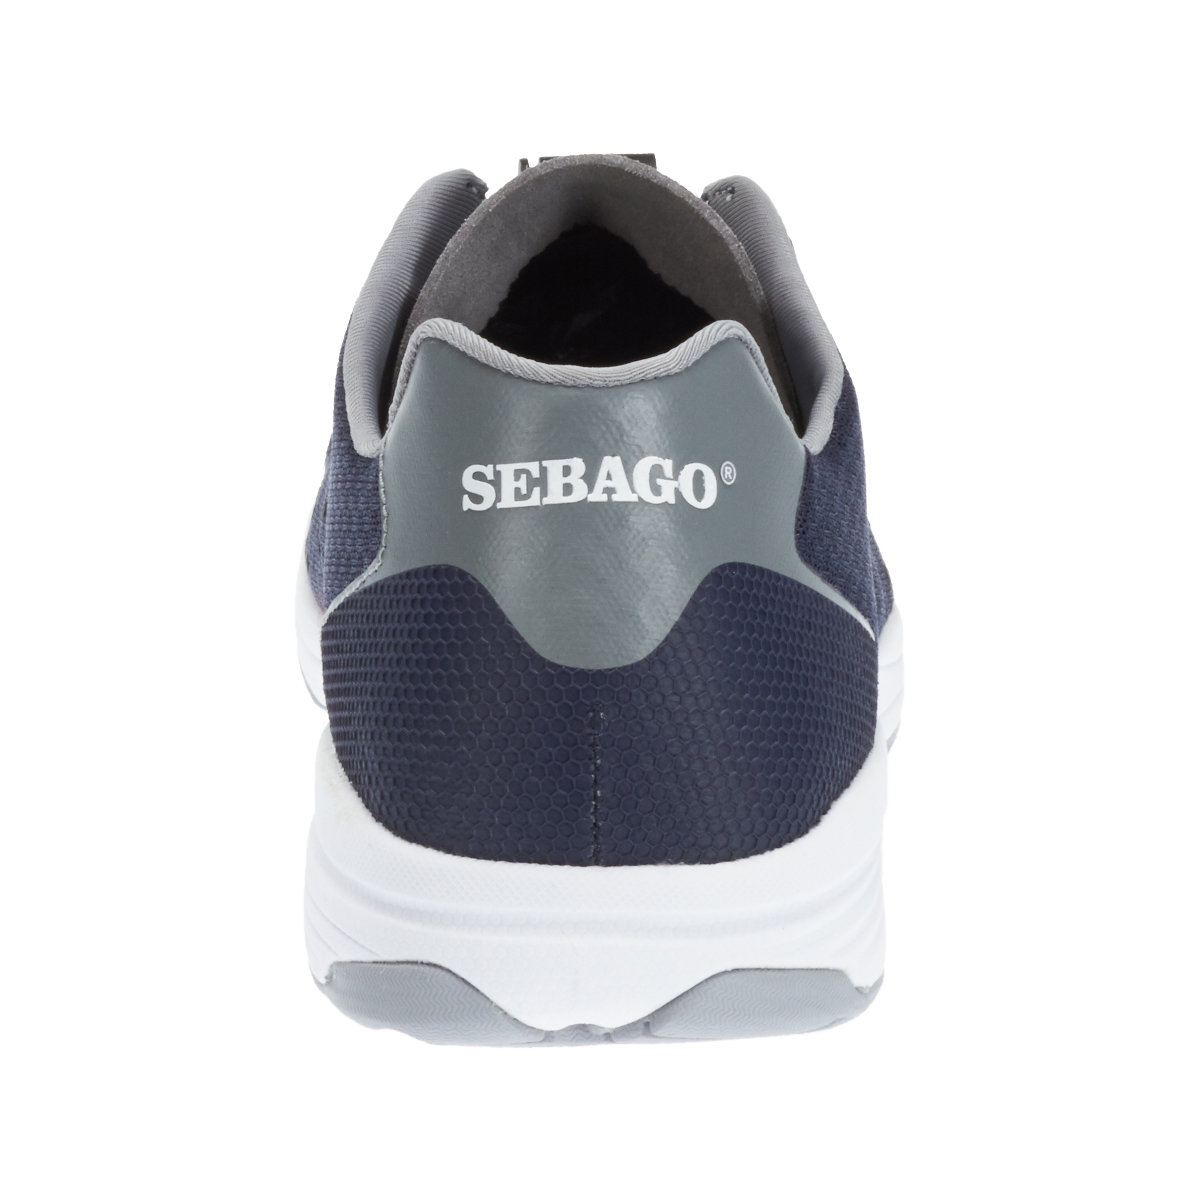 Sebago Cyphon Sea Sport chaussures à voile homme navy, taille EU 44,5 (US 10,5)